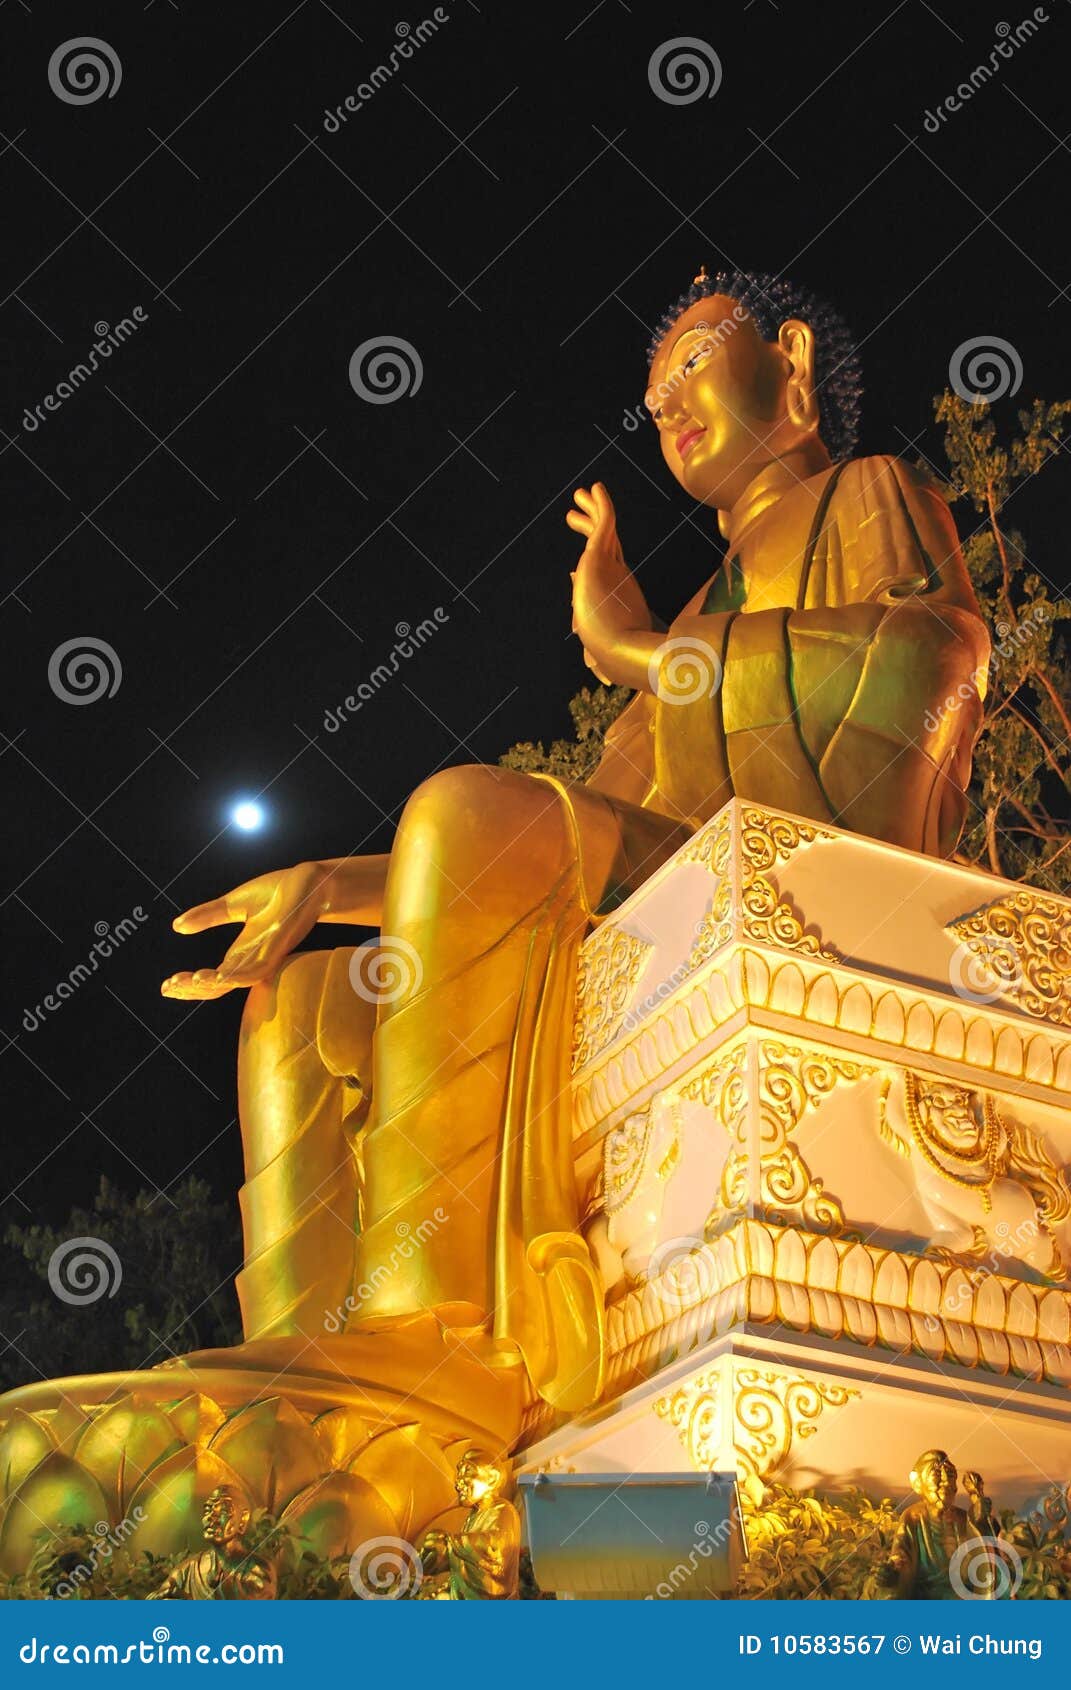 majestic golden buddha statue 10583567